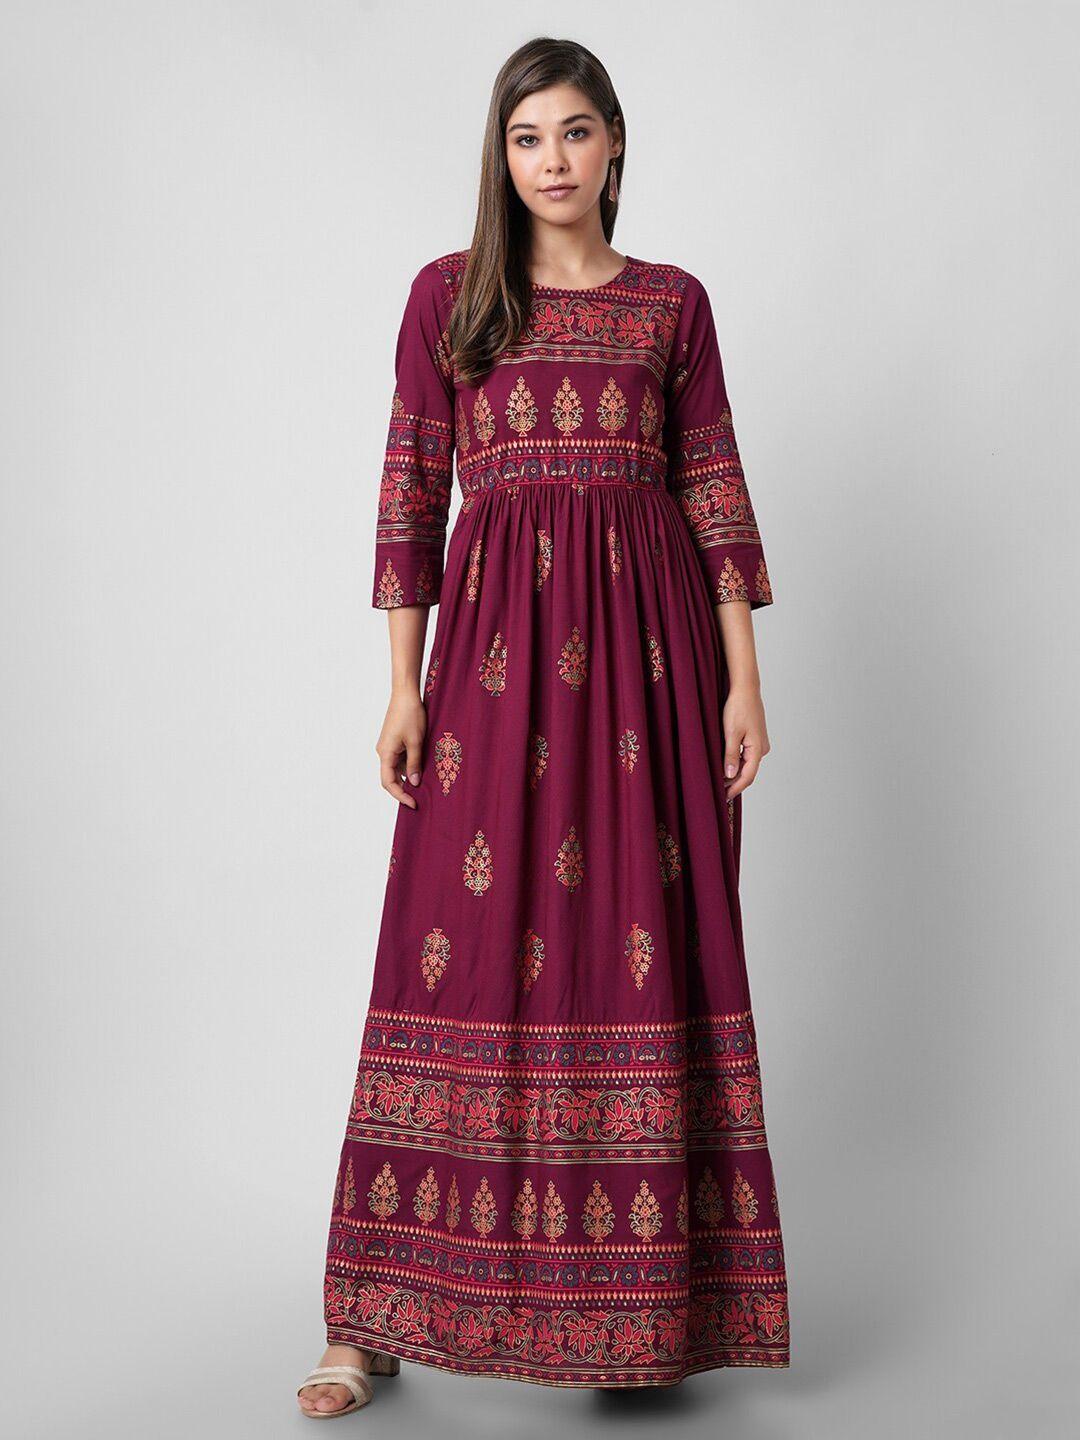 purshottam wala maroon ethnic motifs ethnic maxi dress